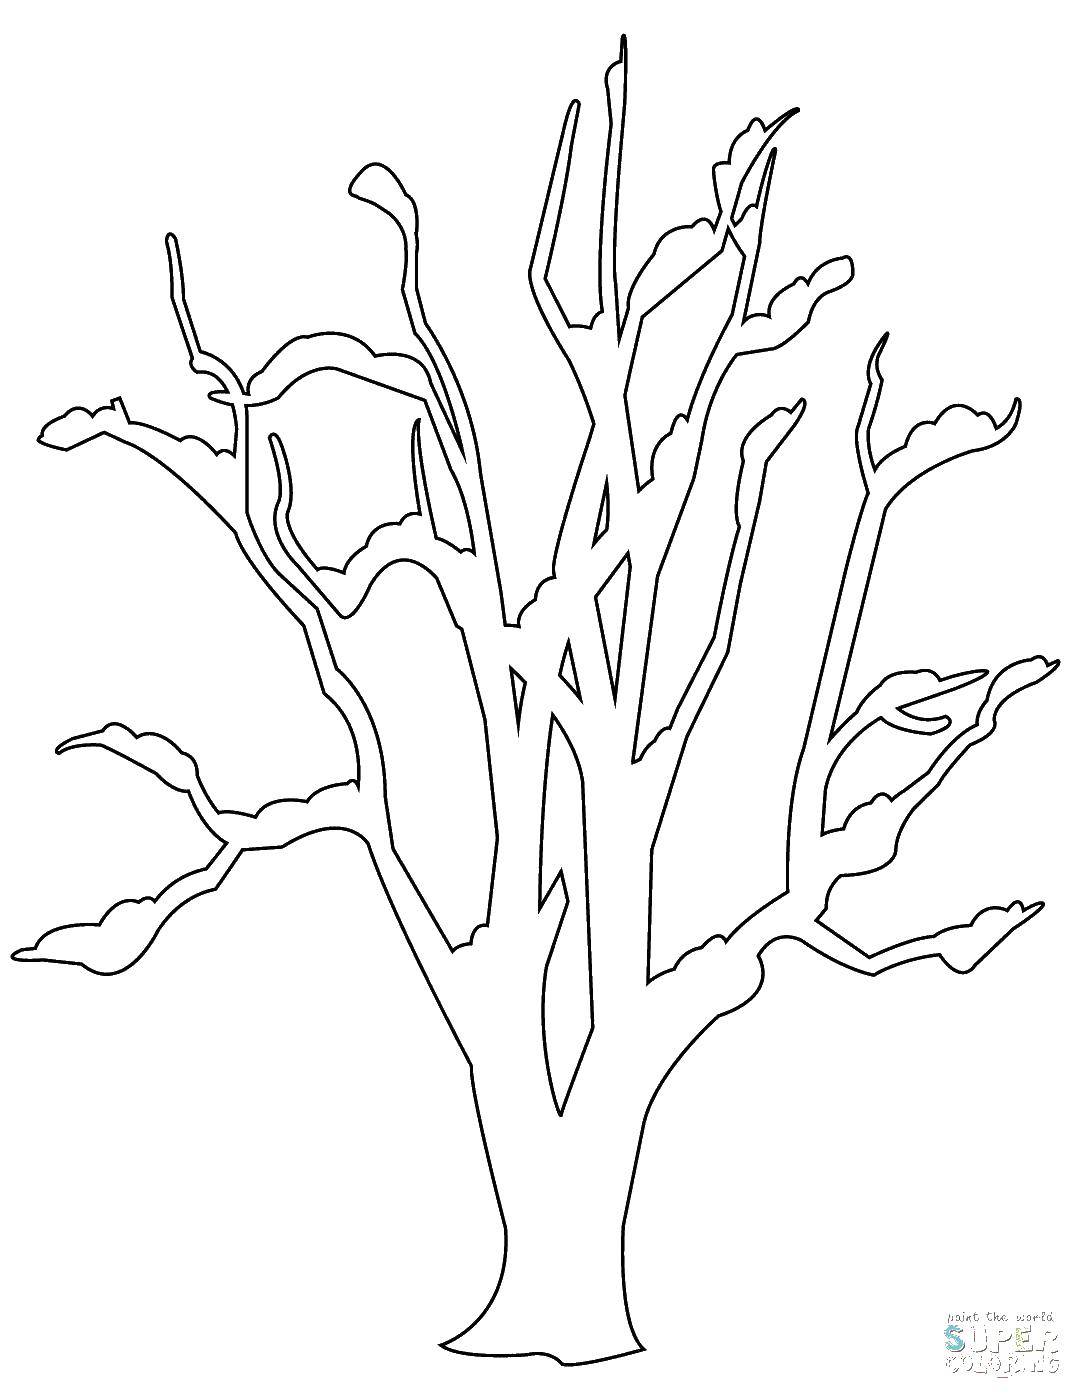 Coloring Tree. Category tree. Tags:  tree.